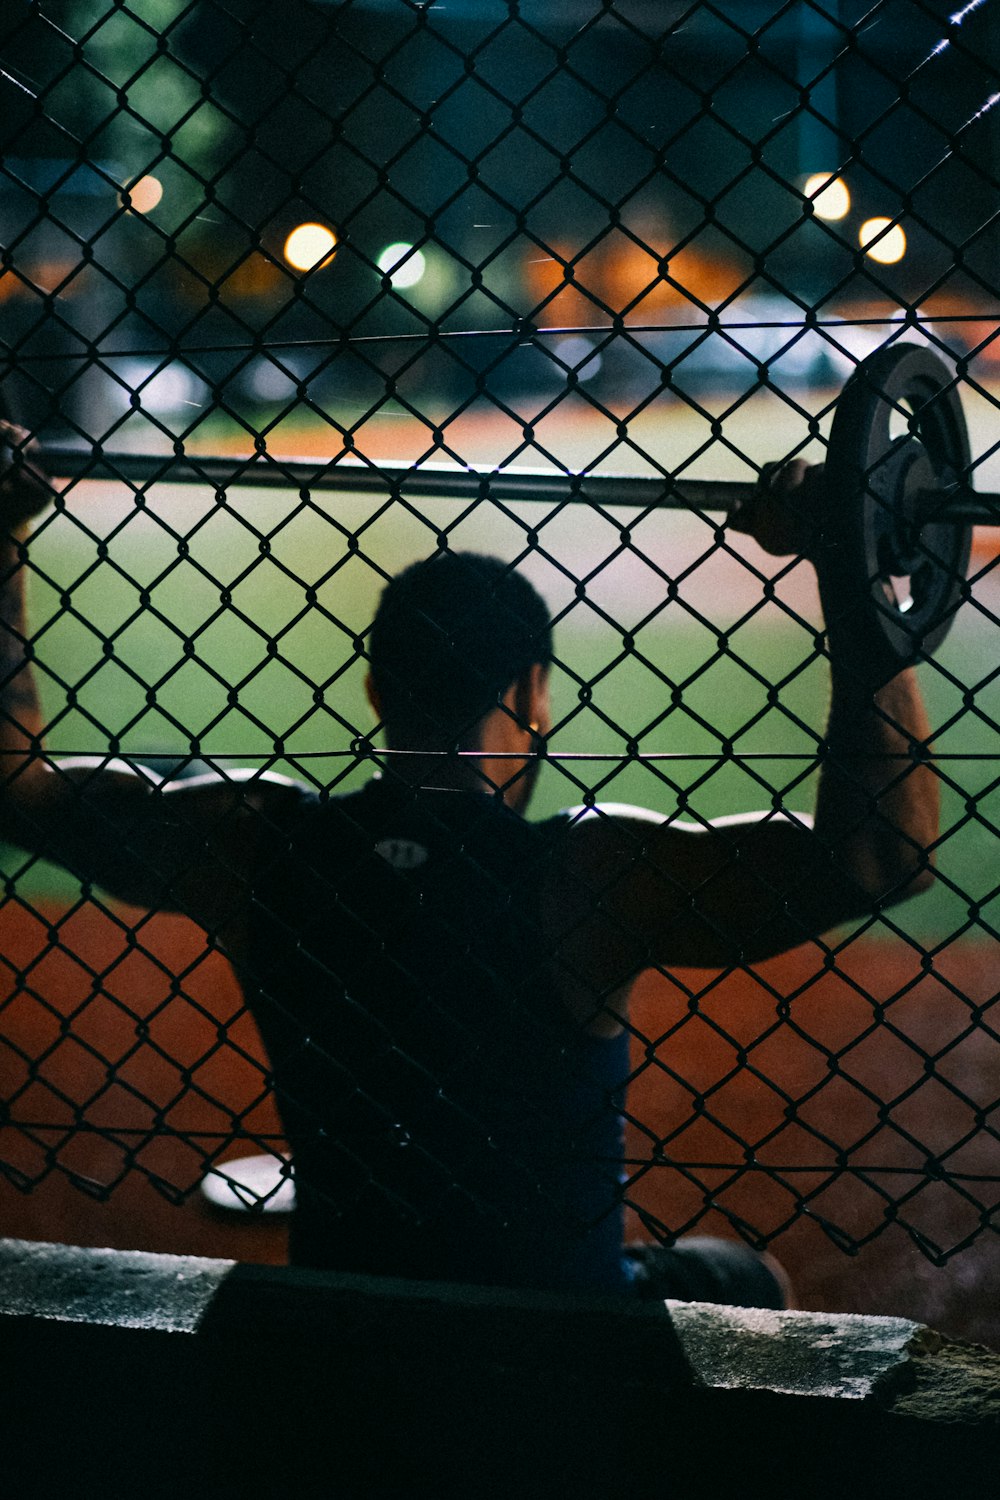 a man holding a baseball bat behind a fence